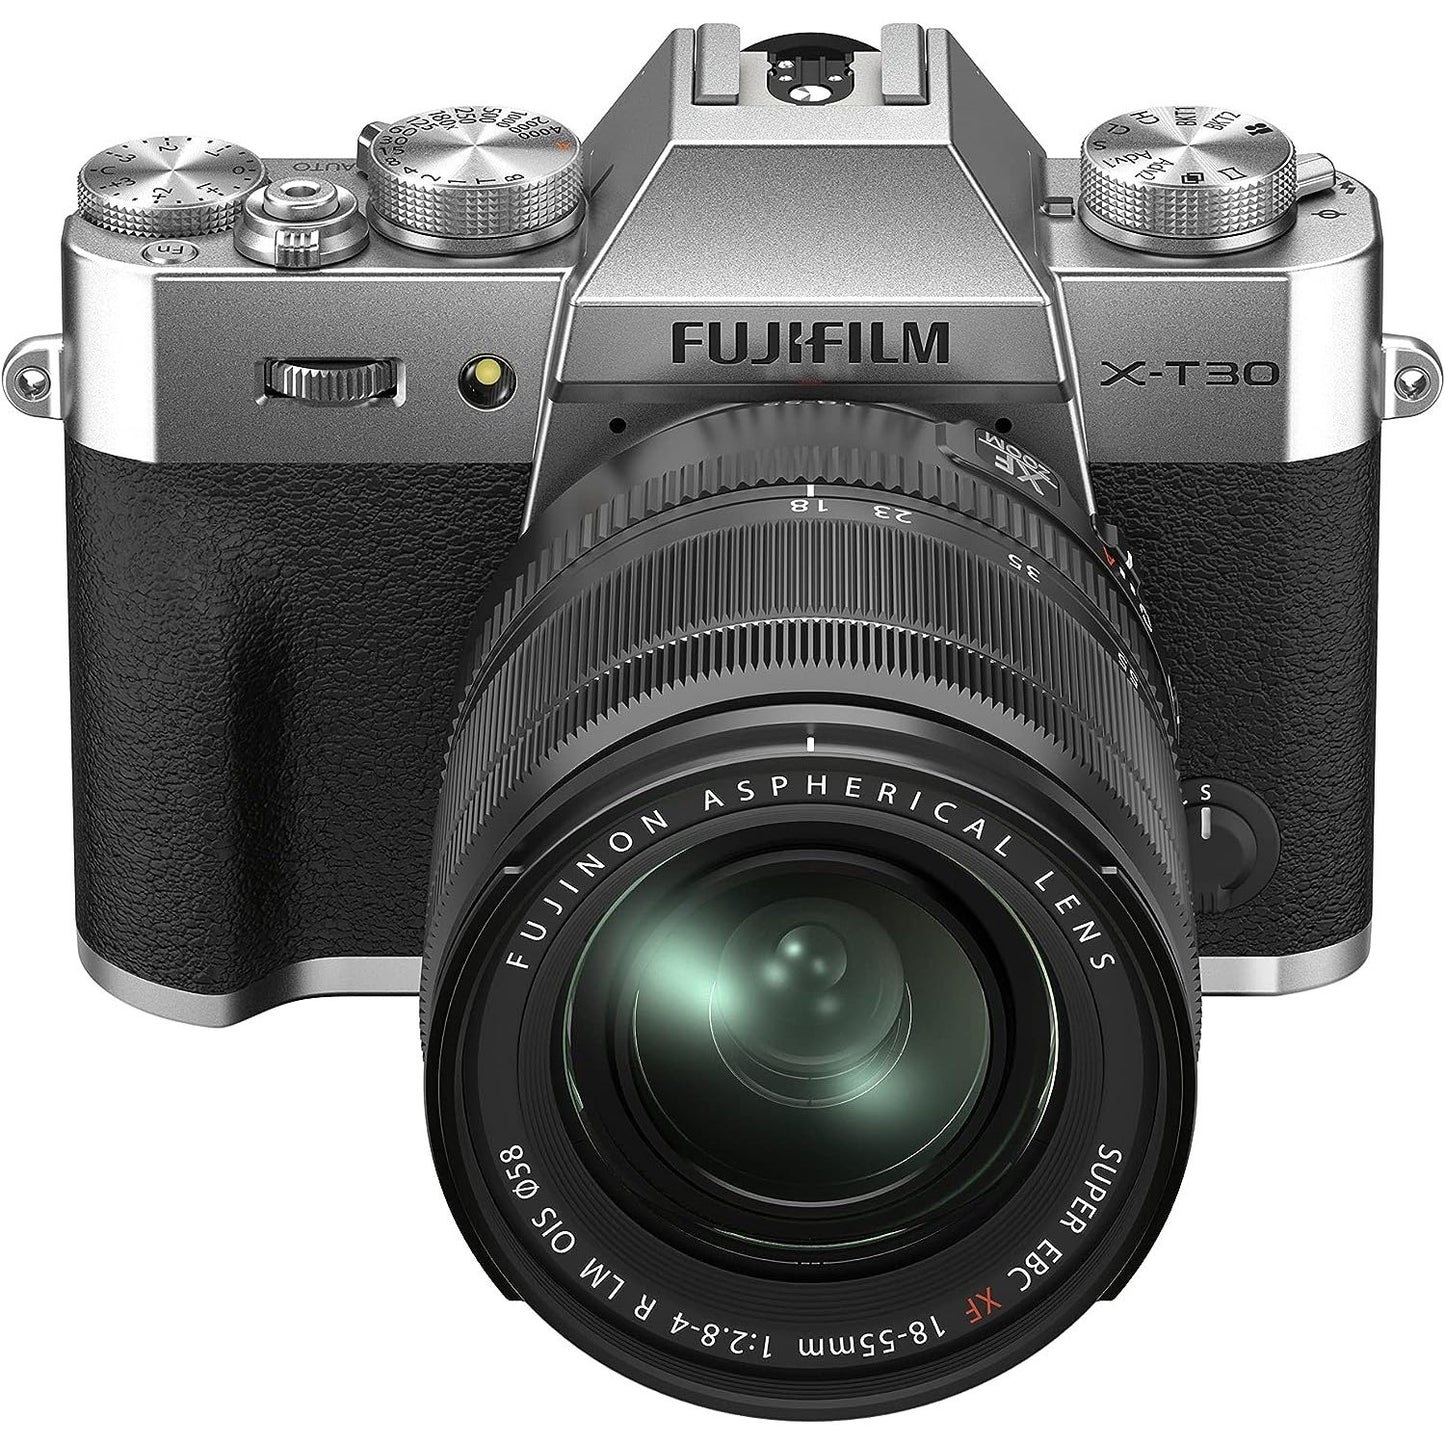 FUJIFILM X-T30 II - Silver - with 18-55mm Lens